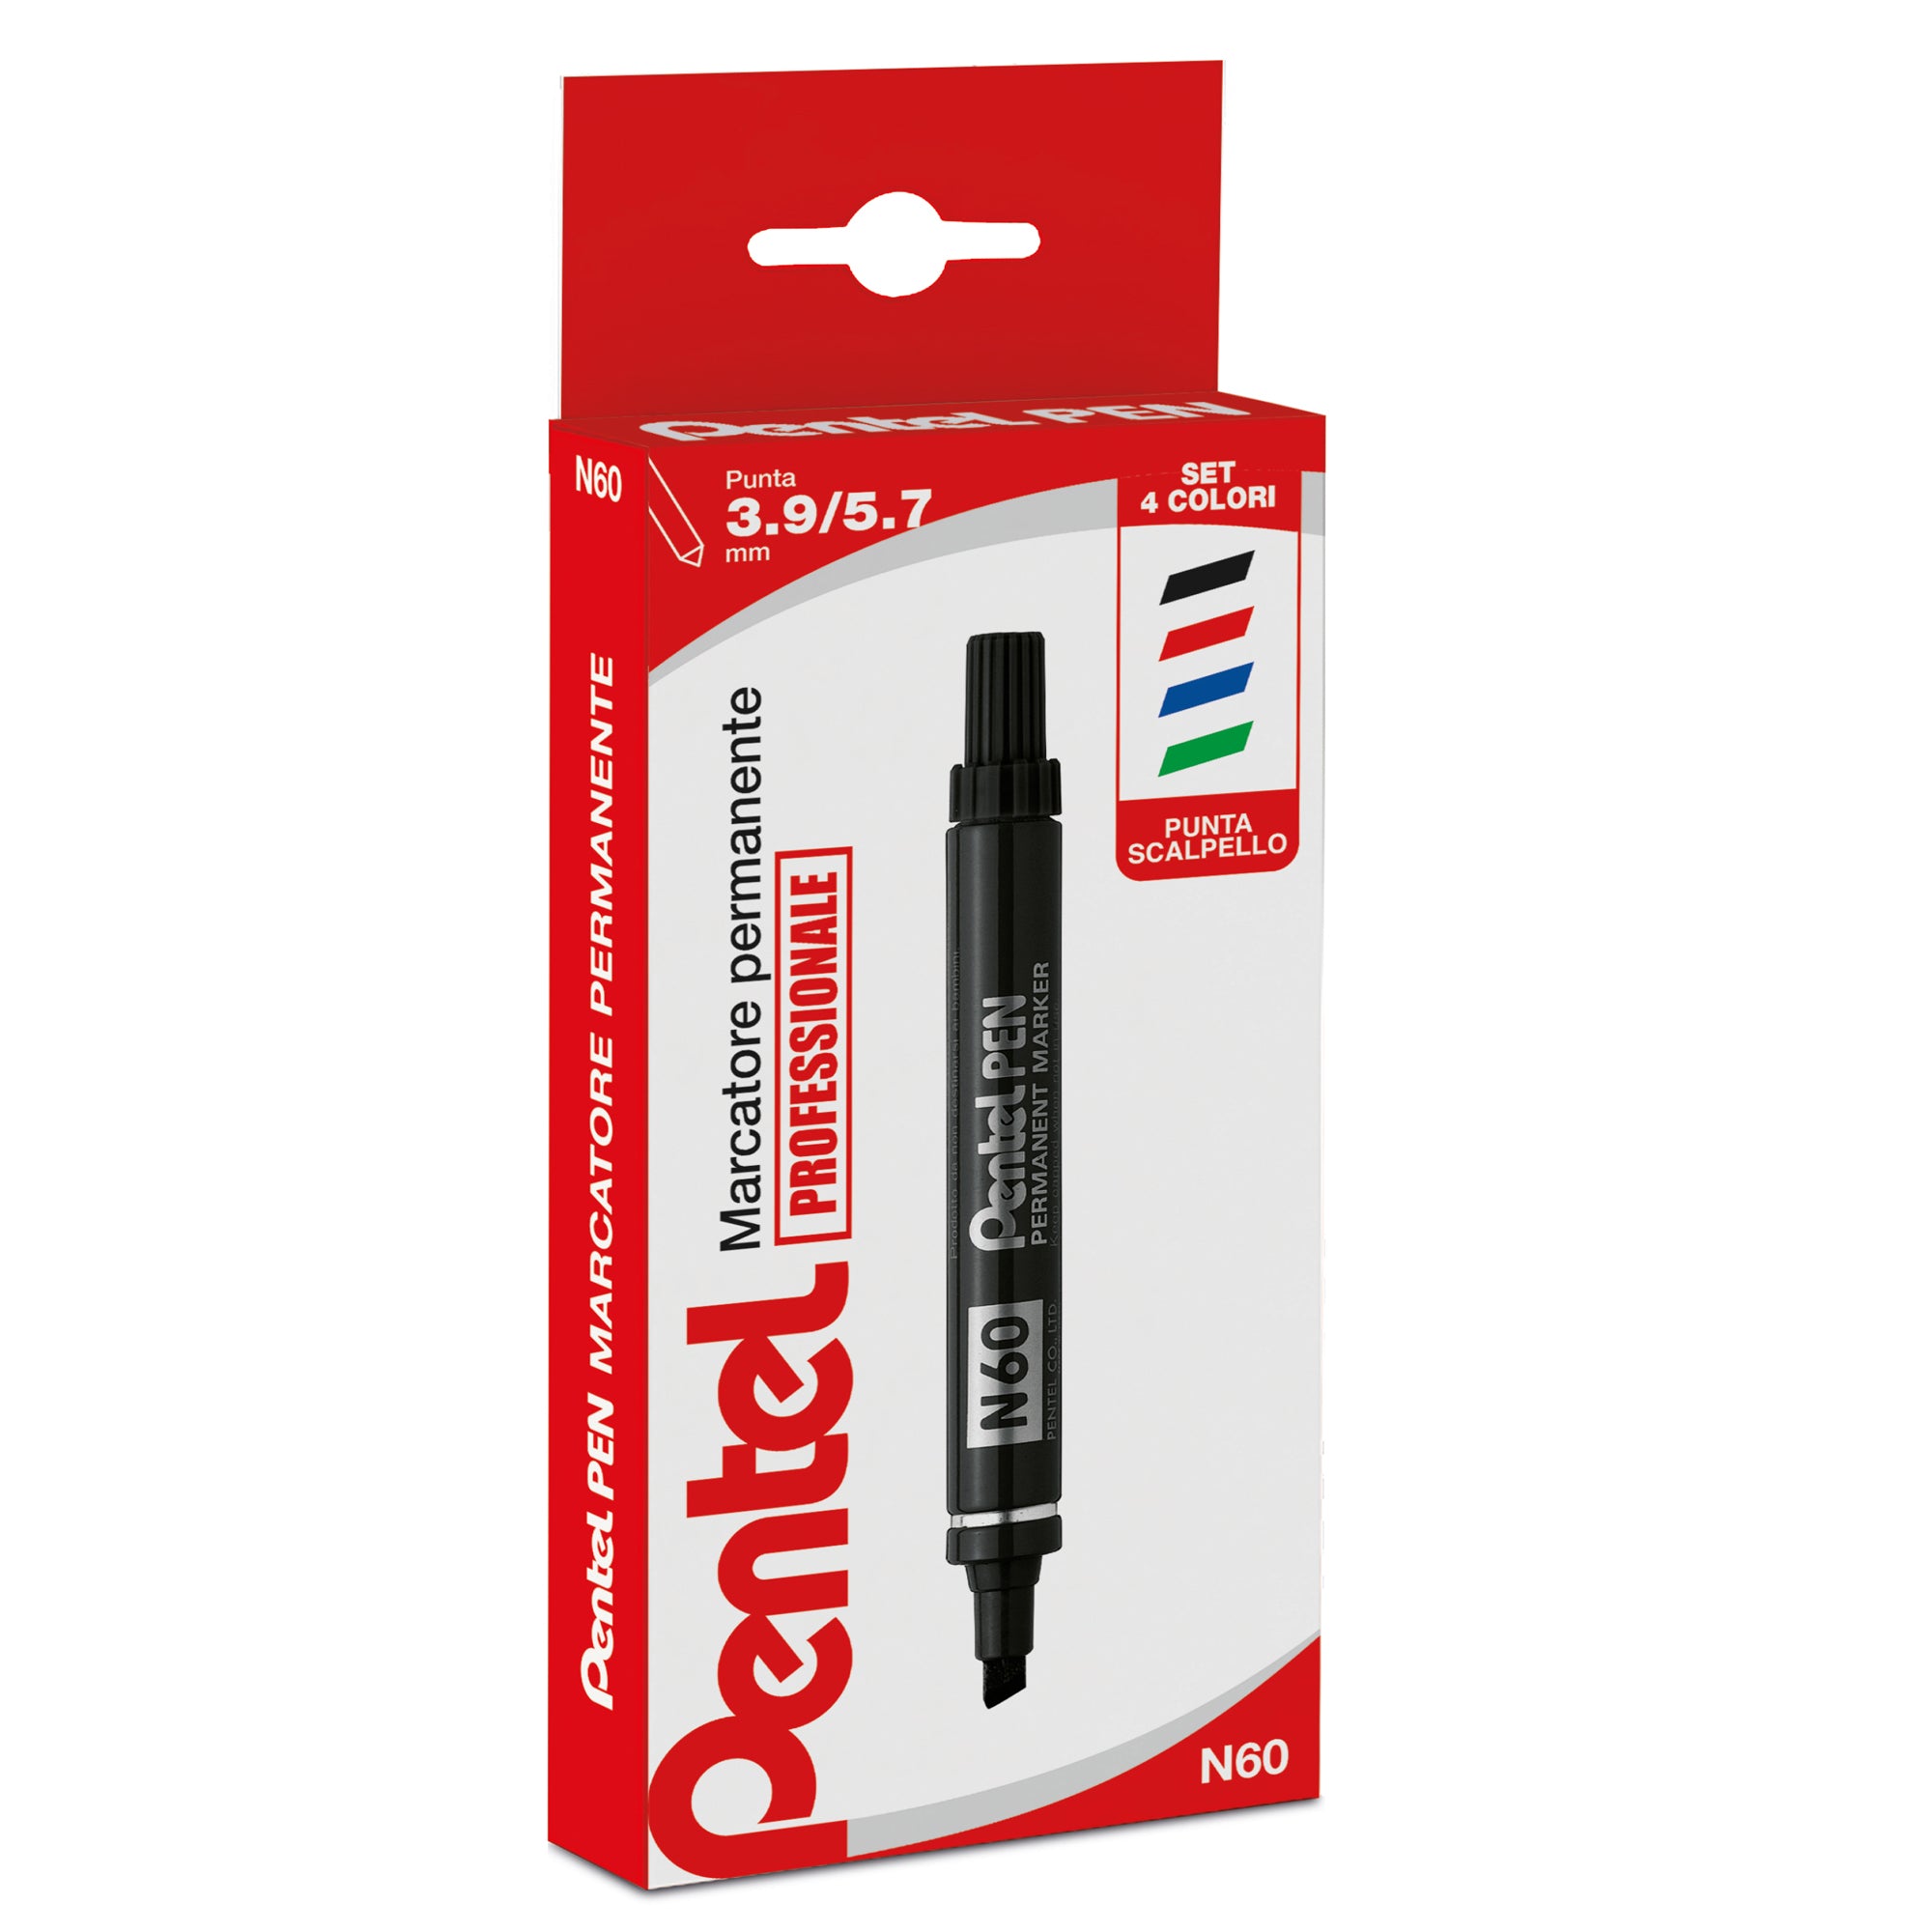 pentel-astuccio-marcatore-pen-n60-4-colori-p-scalpello